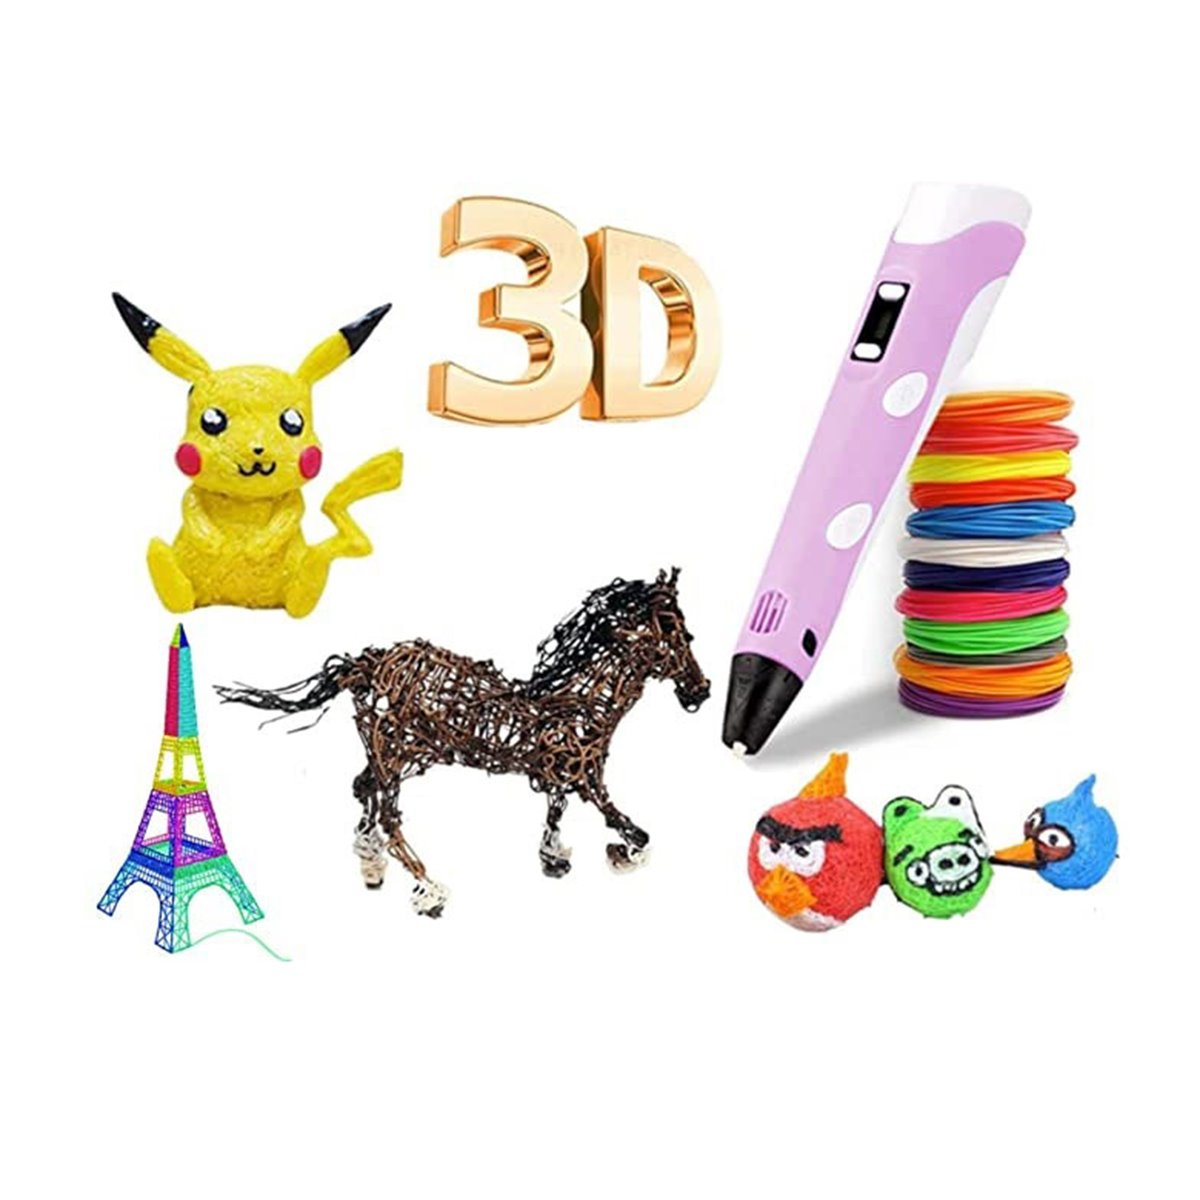 Lapiz de Impresión 3D Juguete para Niños Azul - Conforama